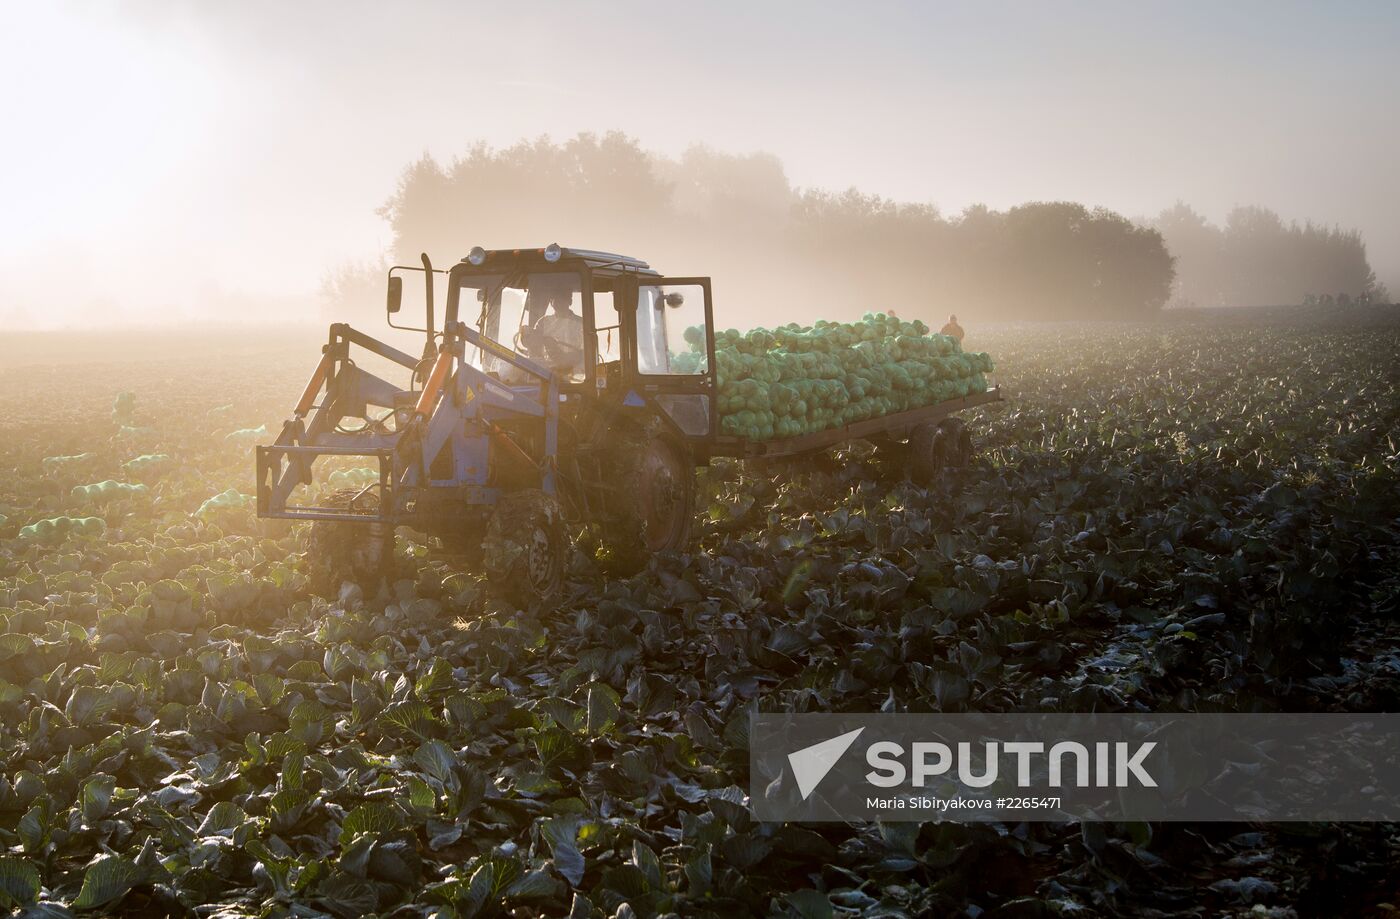 Harvesting cabbage in Ivanovo District